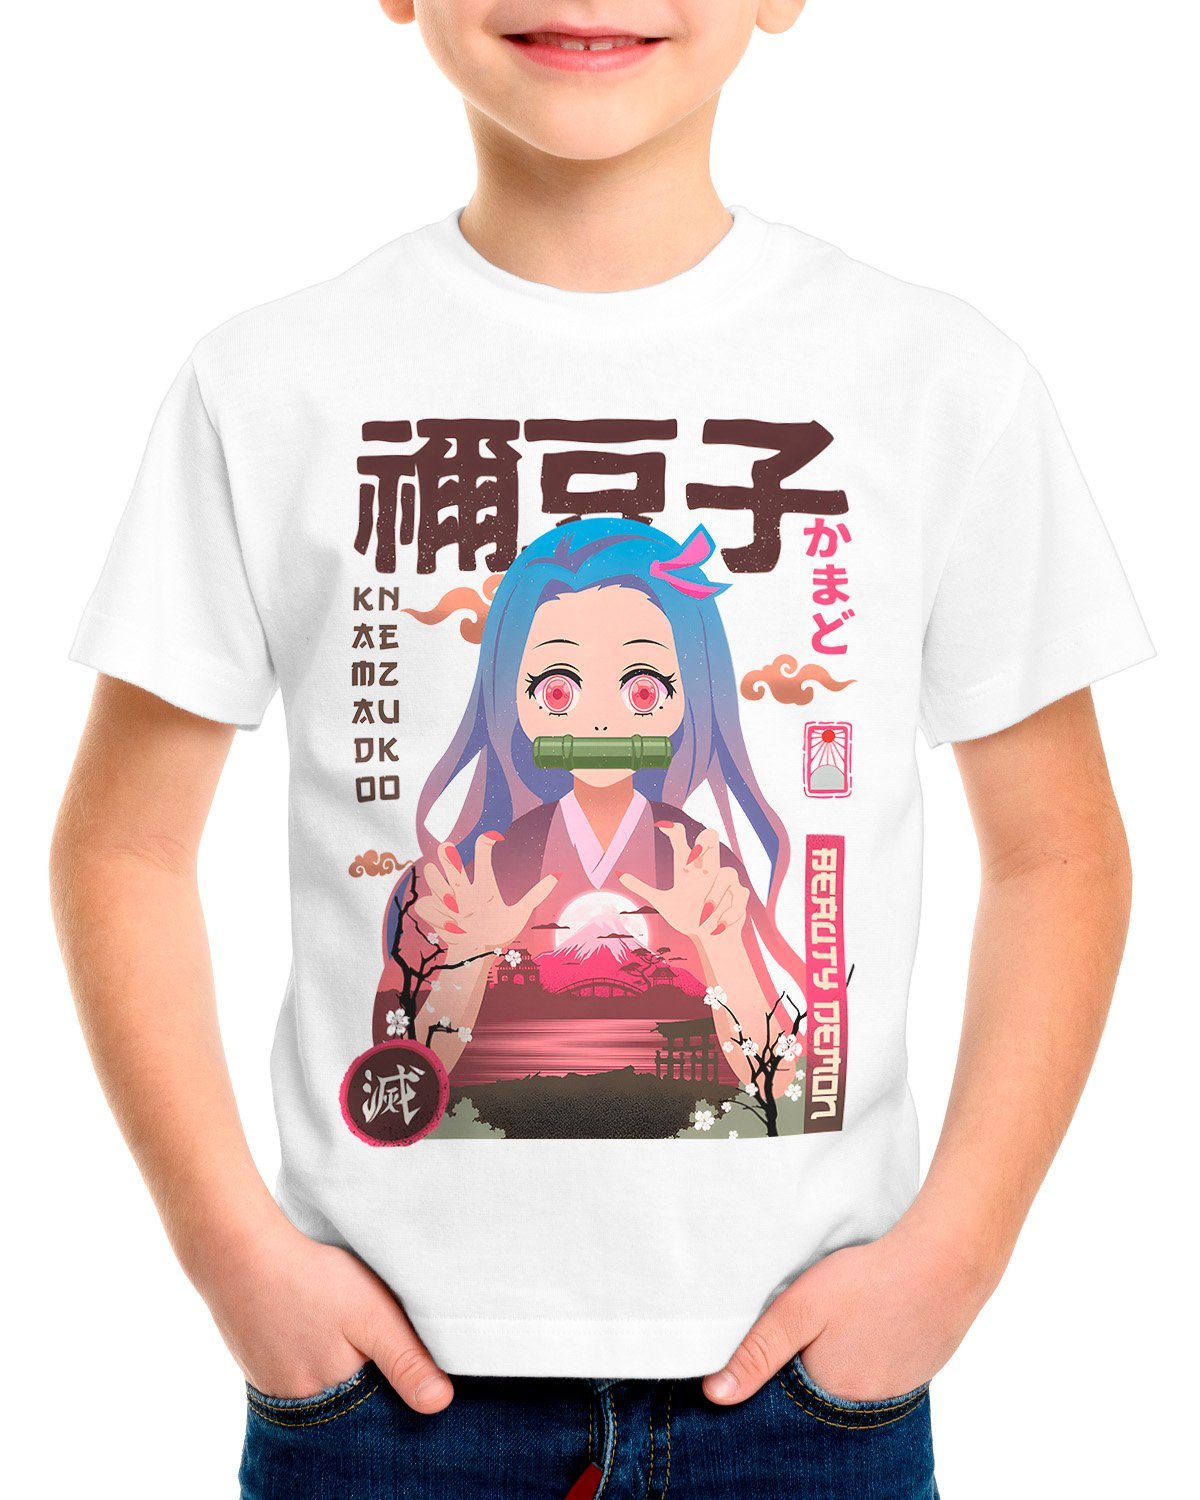 style3 Print-Shirt demon anime japan manga slayer